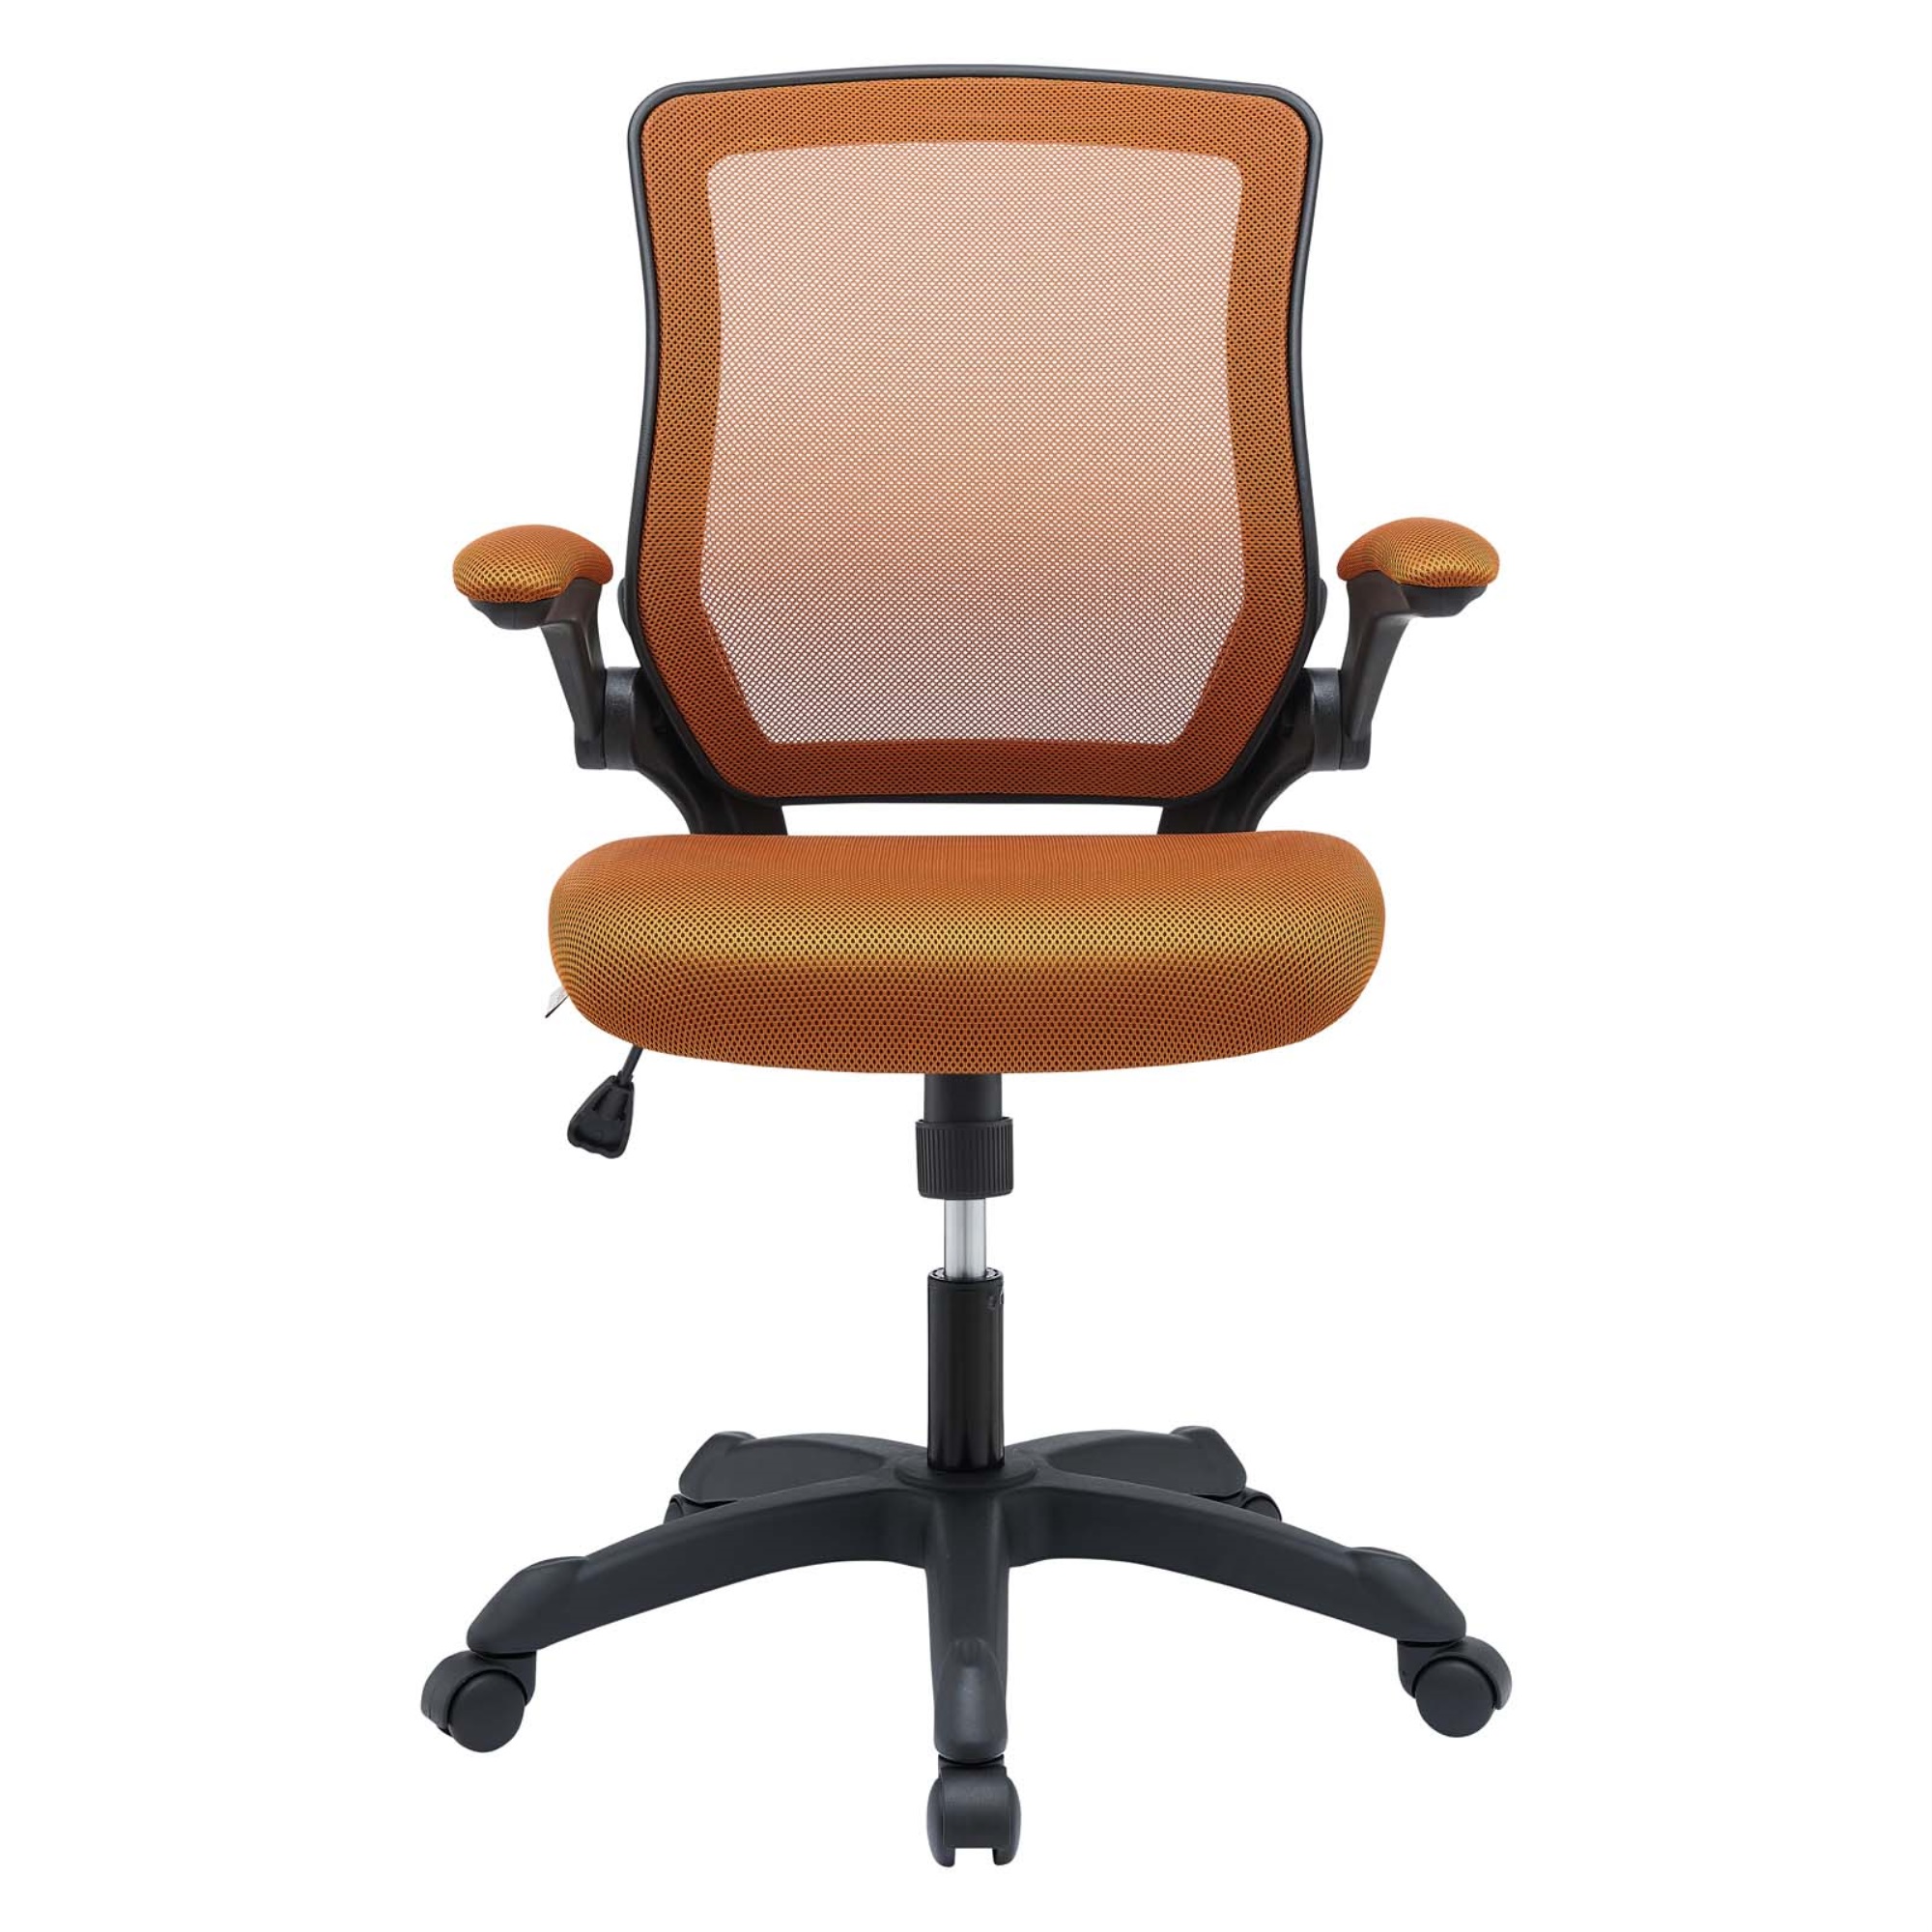 Ergode Veer Mesh Office Chair - Tan